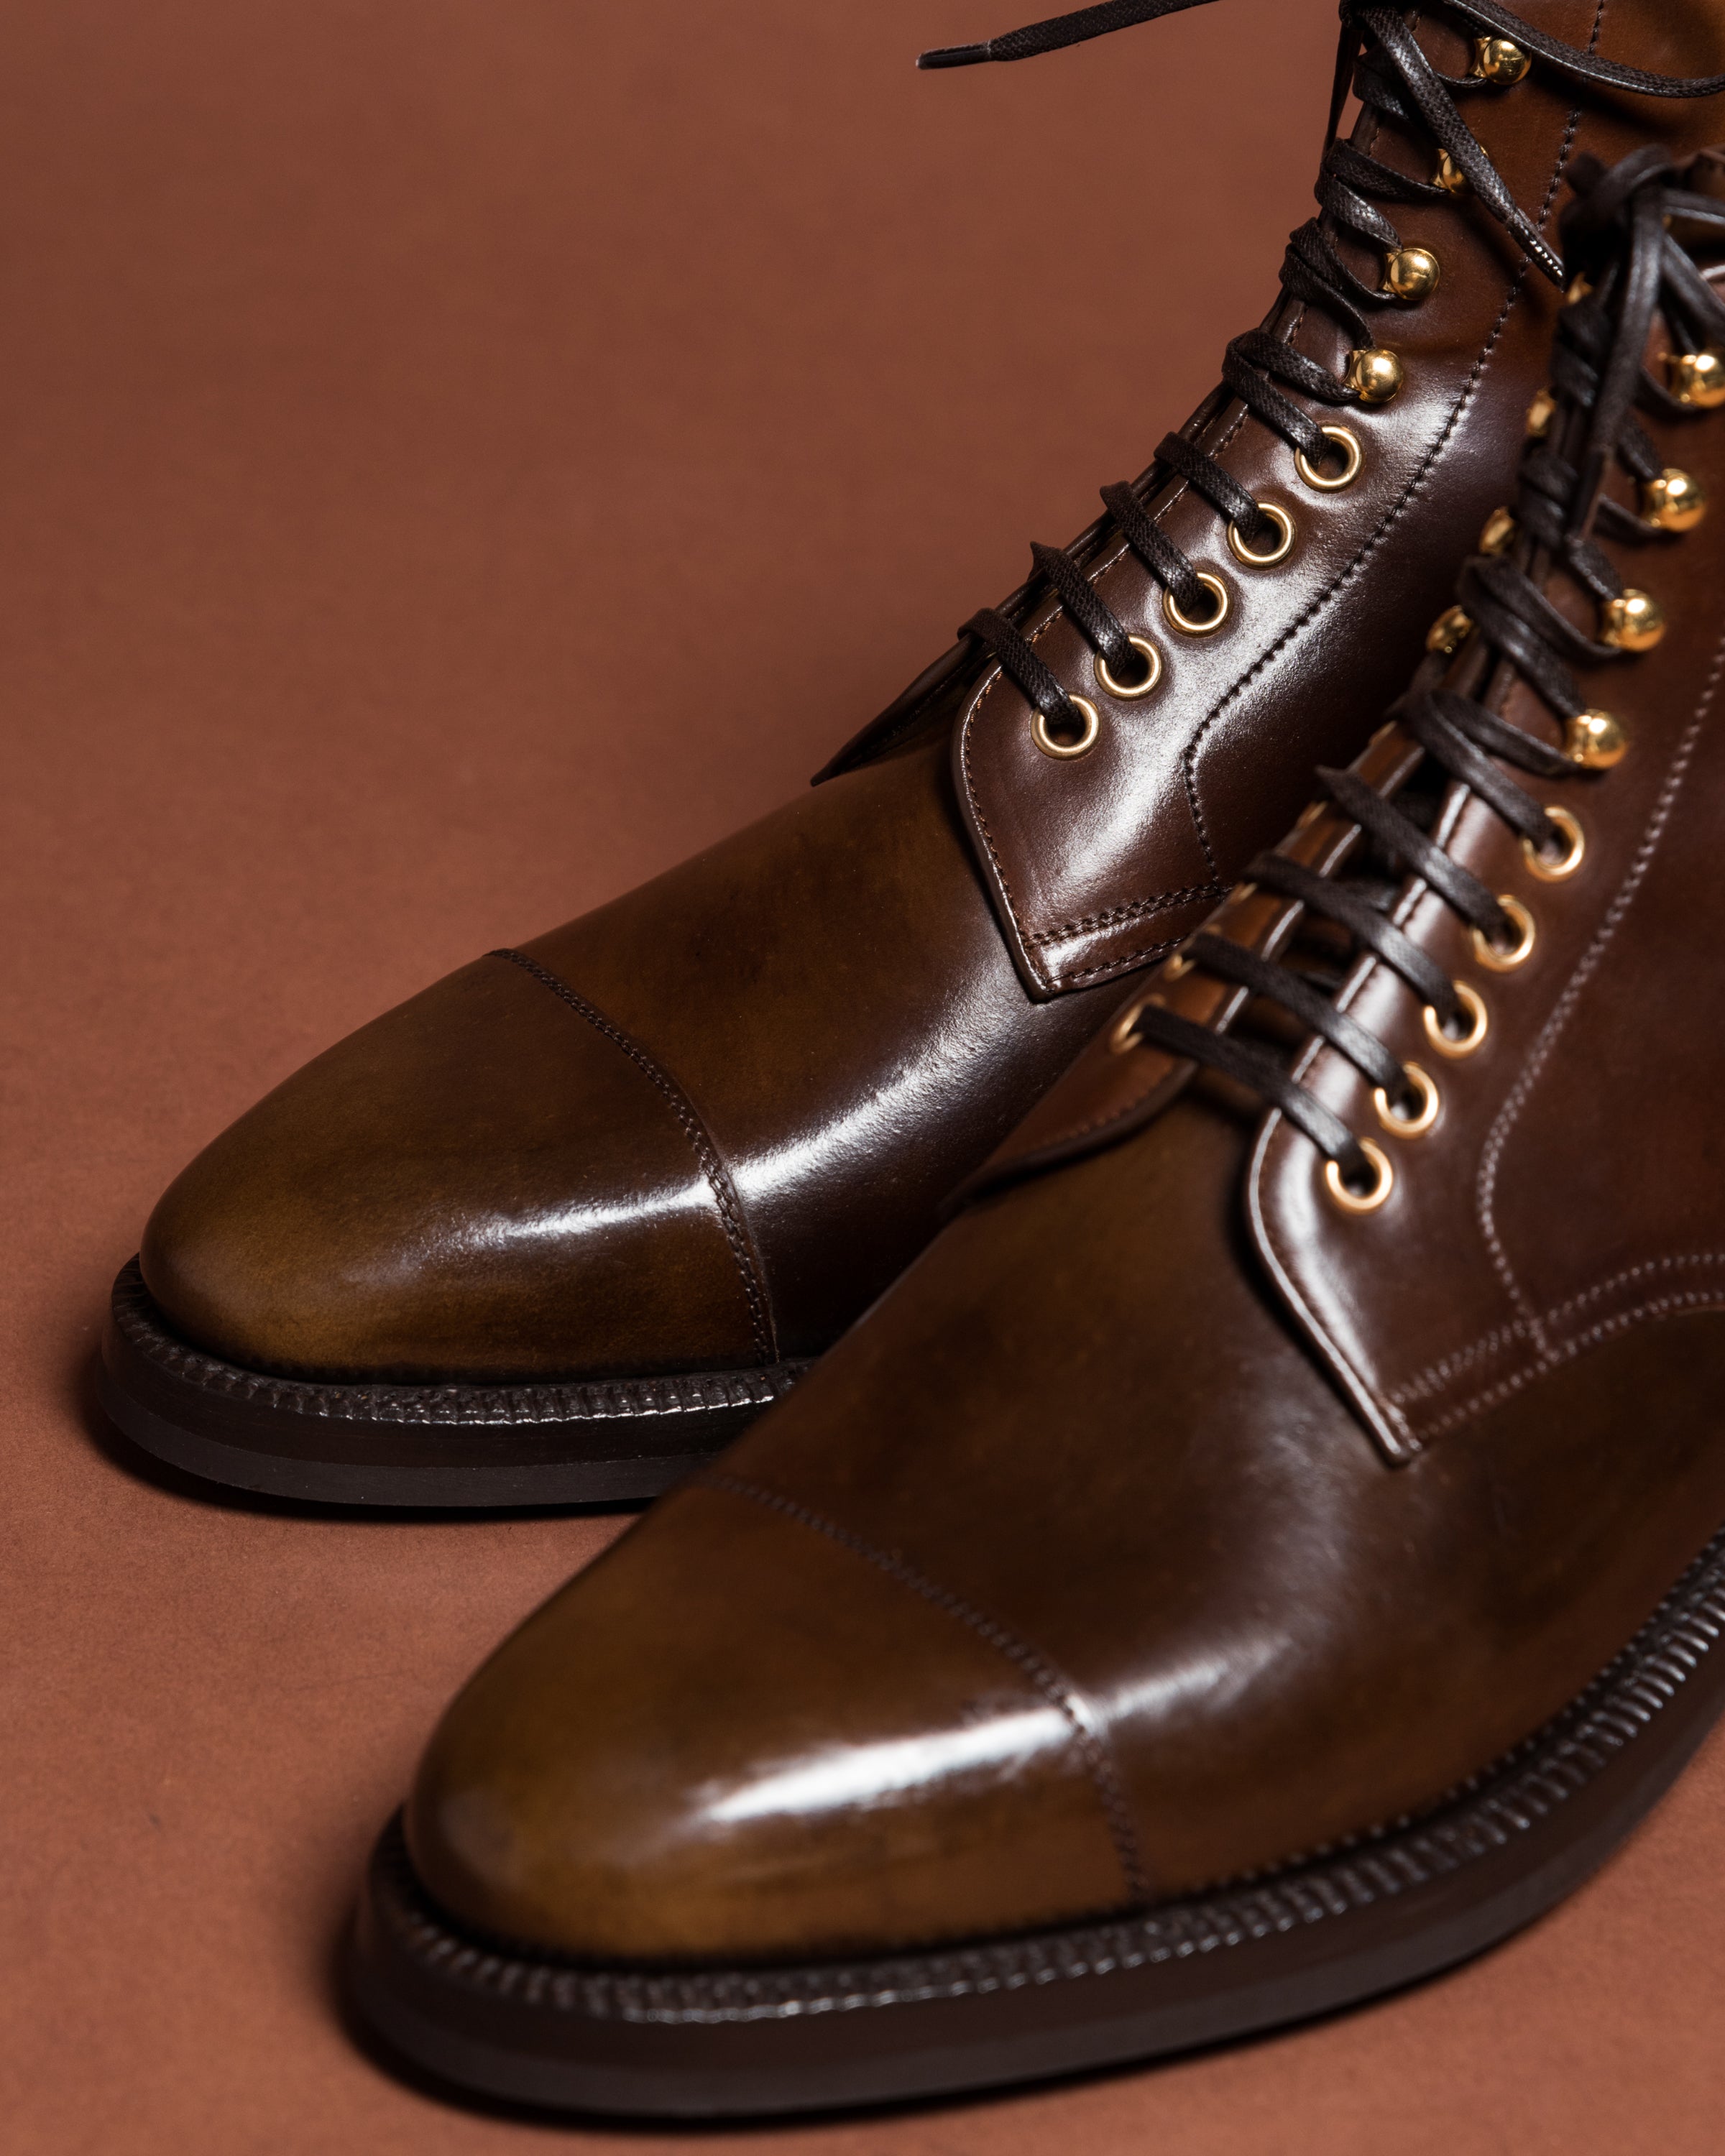 Boots – Skoaktiebolaget